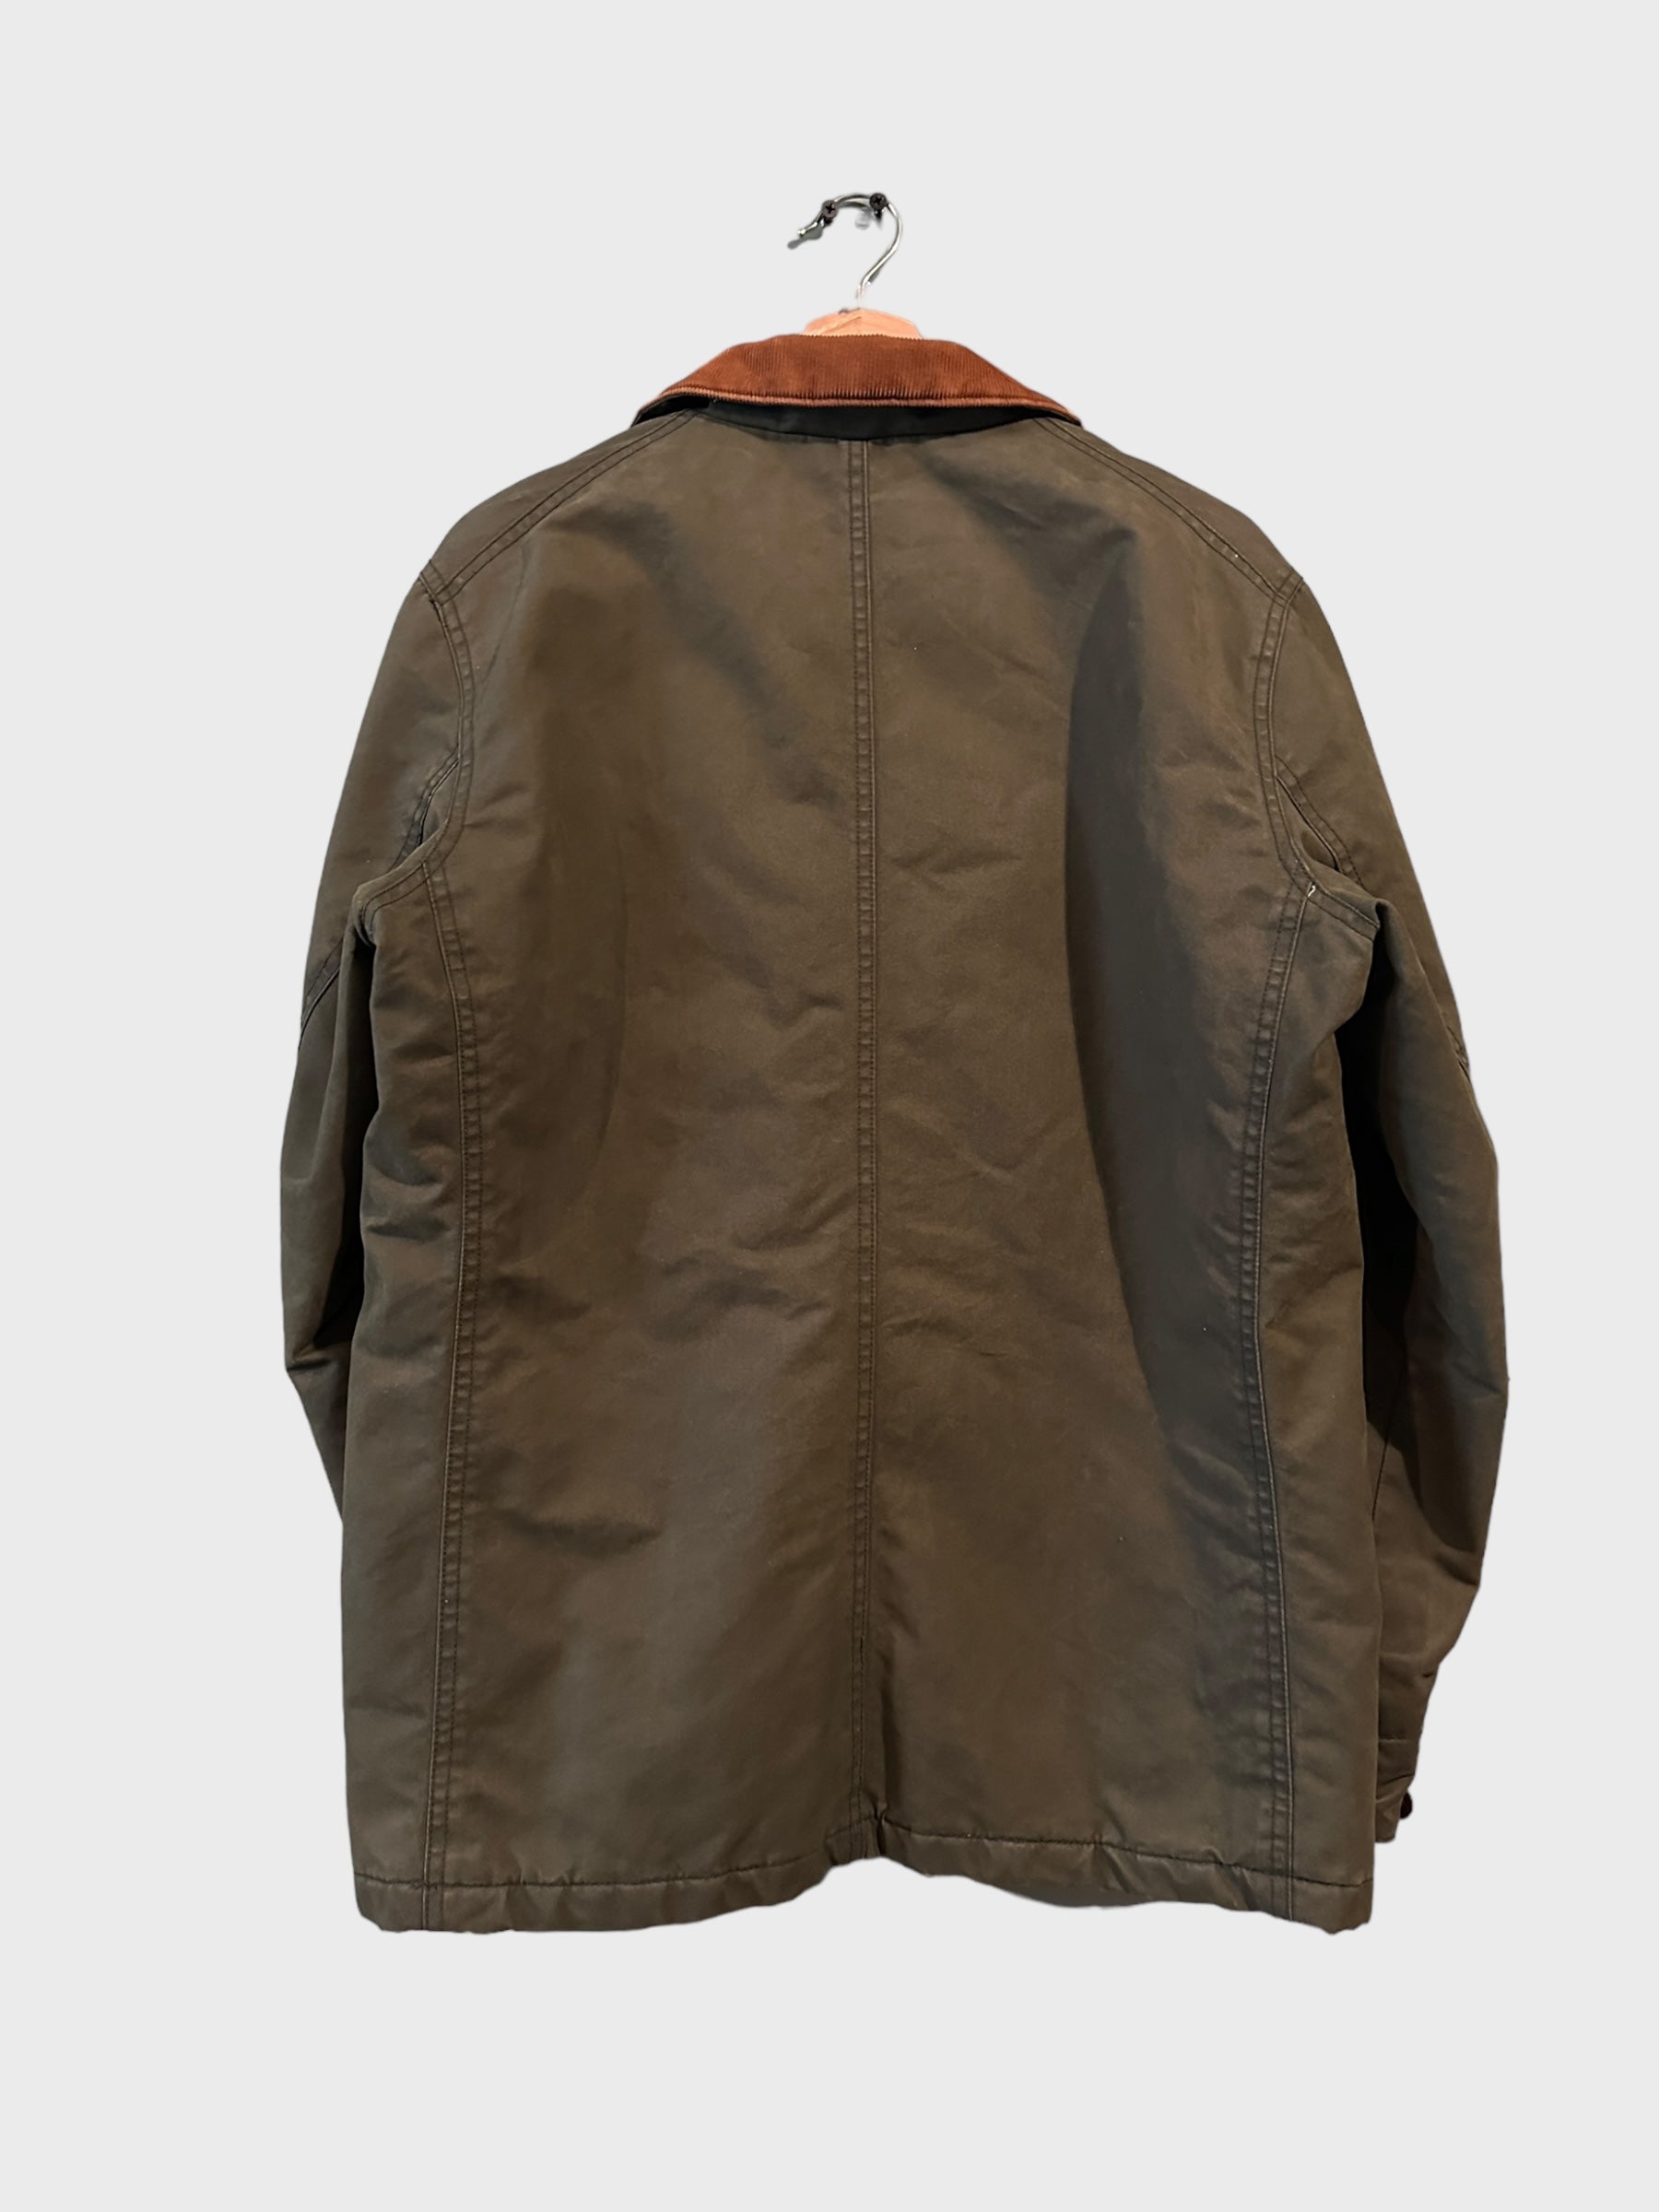 Levi's Engineered Workwear Jacket